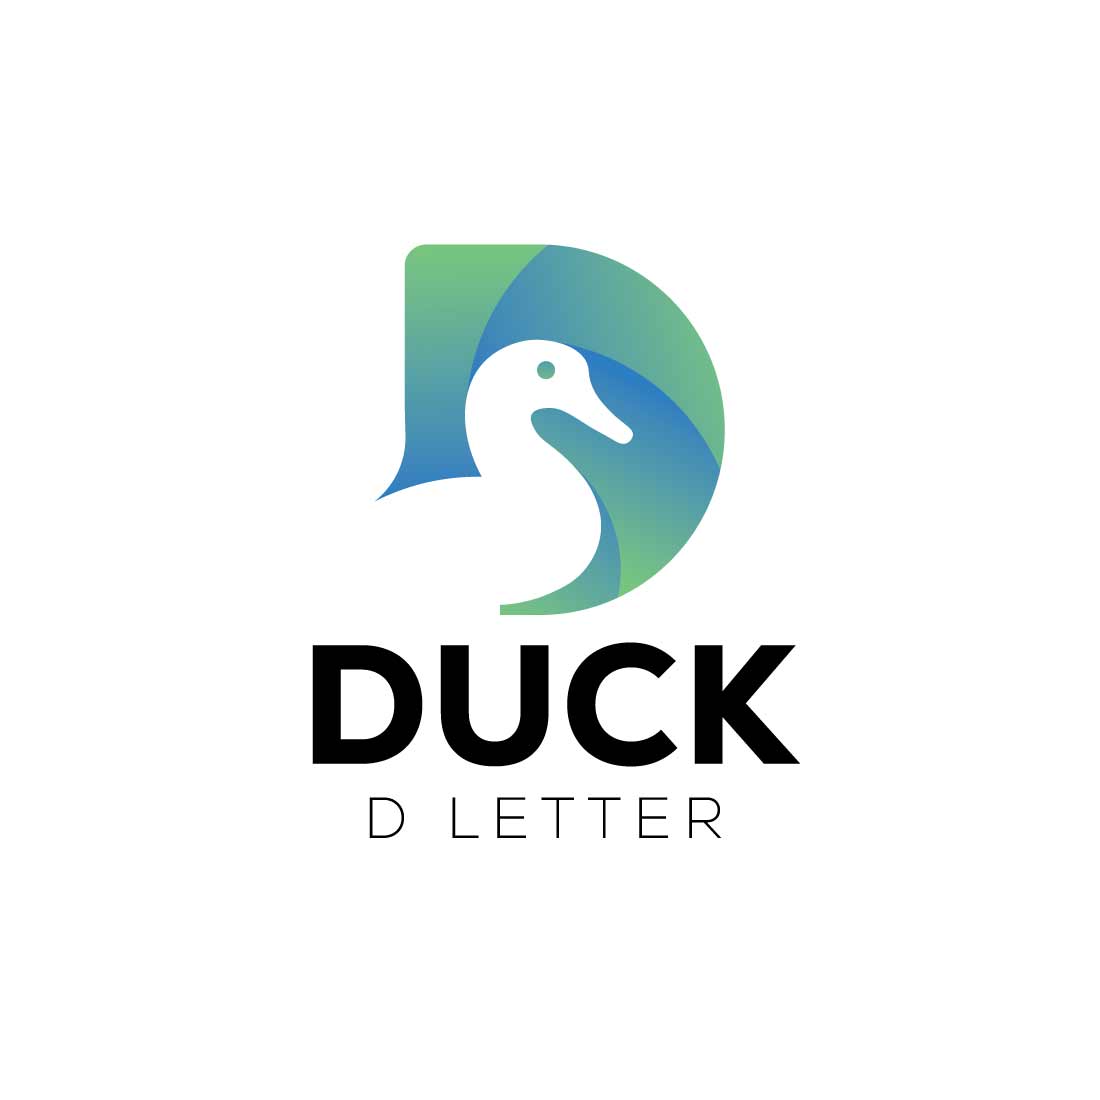 Initial letter D Duck logo design preview image.